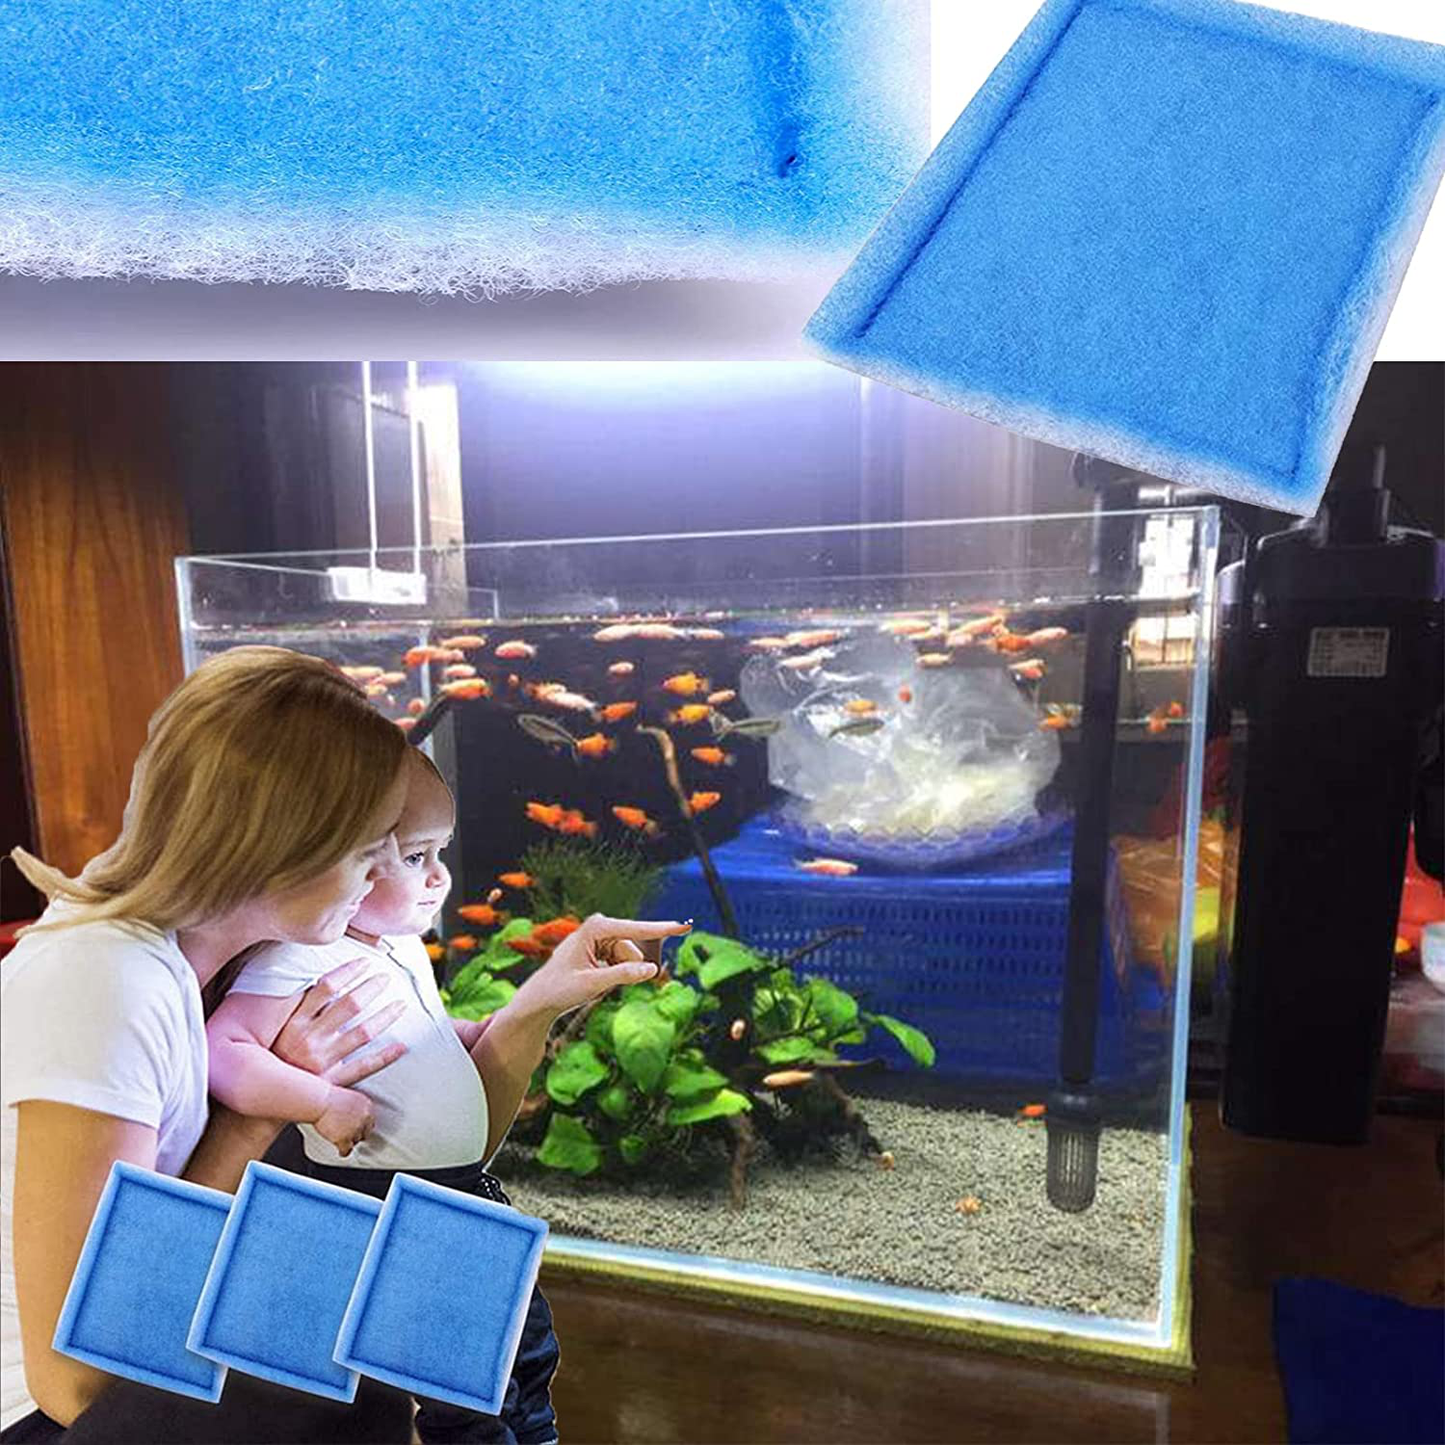 HNKMDK Aquarium Filter Cartridge, Fish Tank Filter Cartridge,Compatible with Ez-Change 3 Aquarium Filter,Fits 20-40 and 30-60 Power Filters,Aquarium Filter Replacement Parts